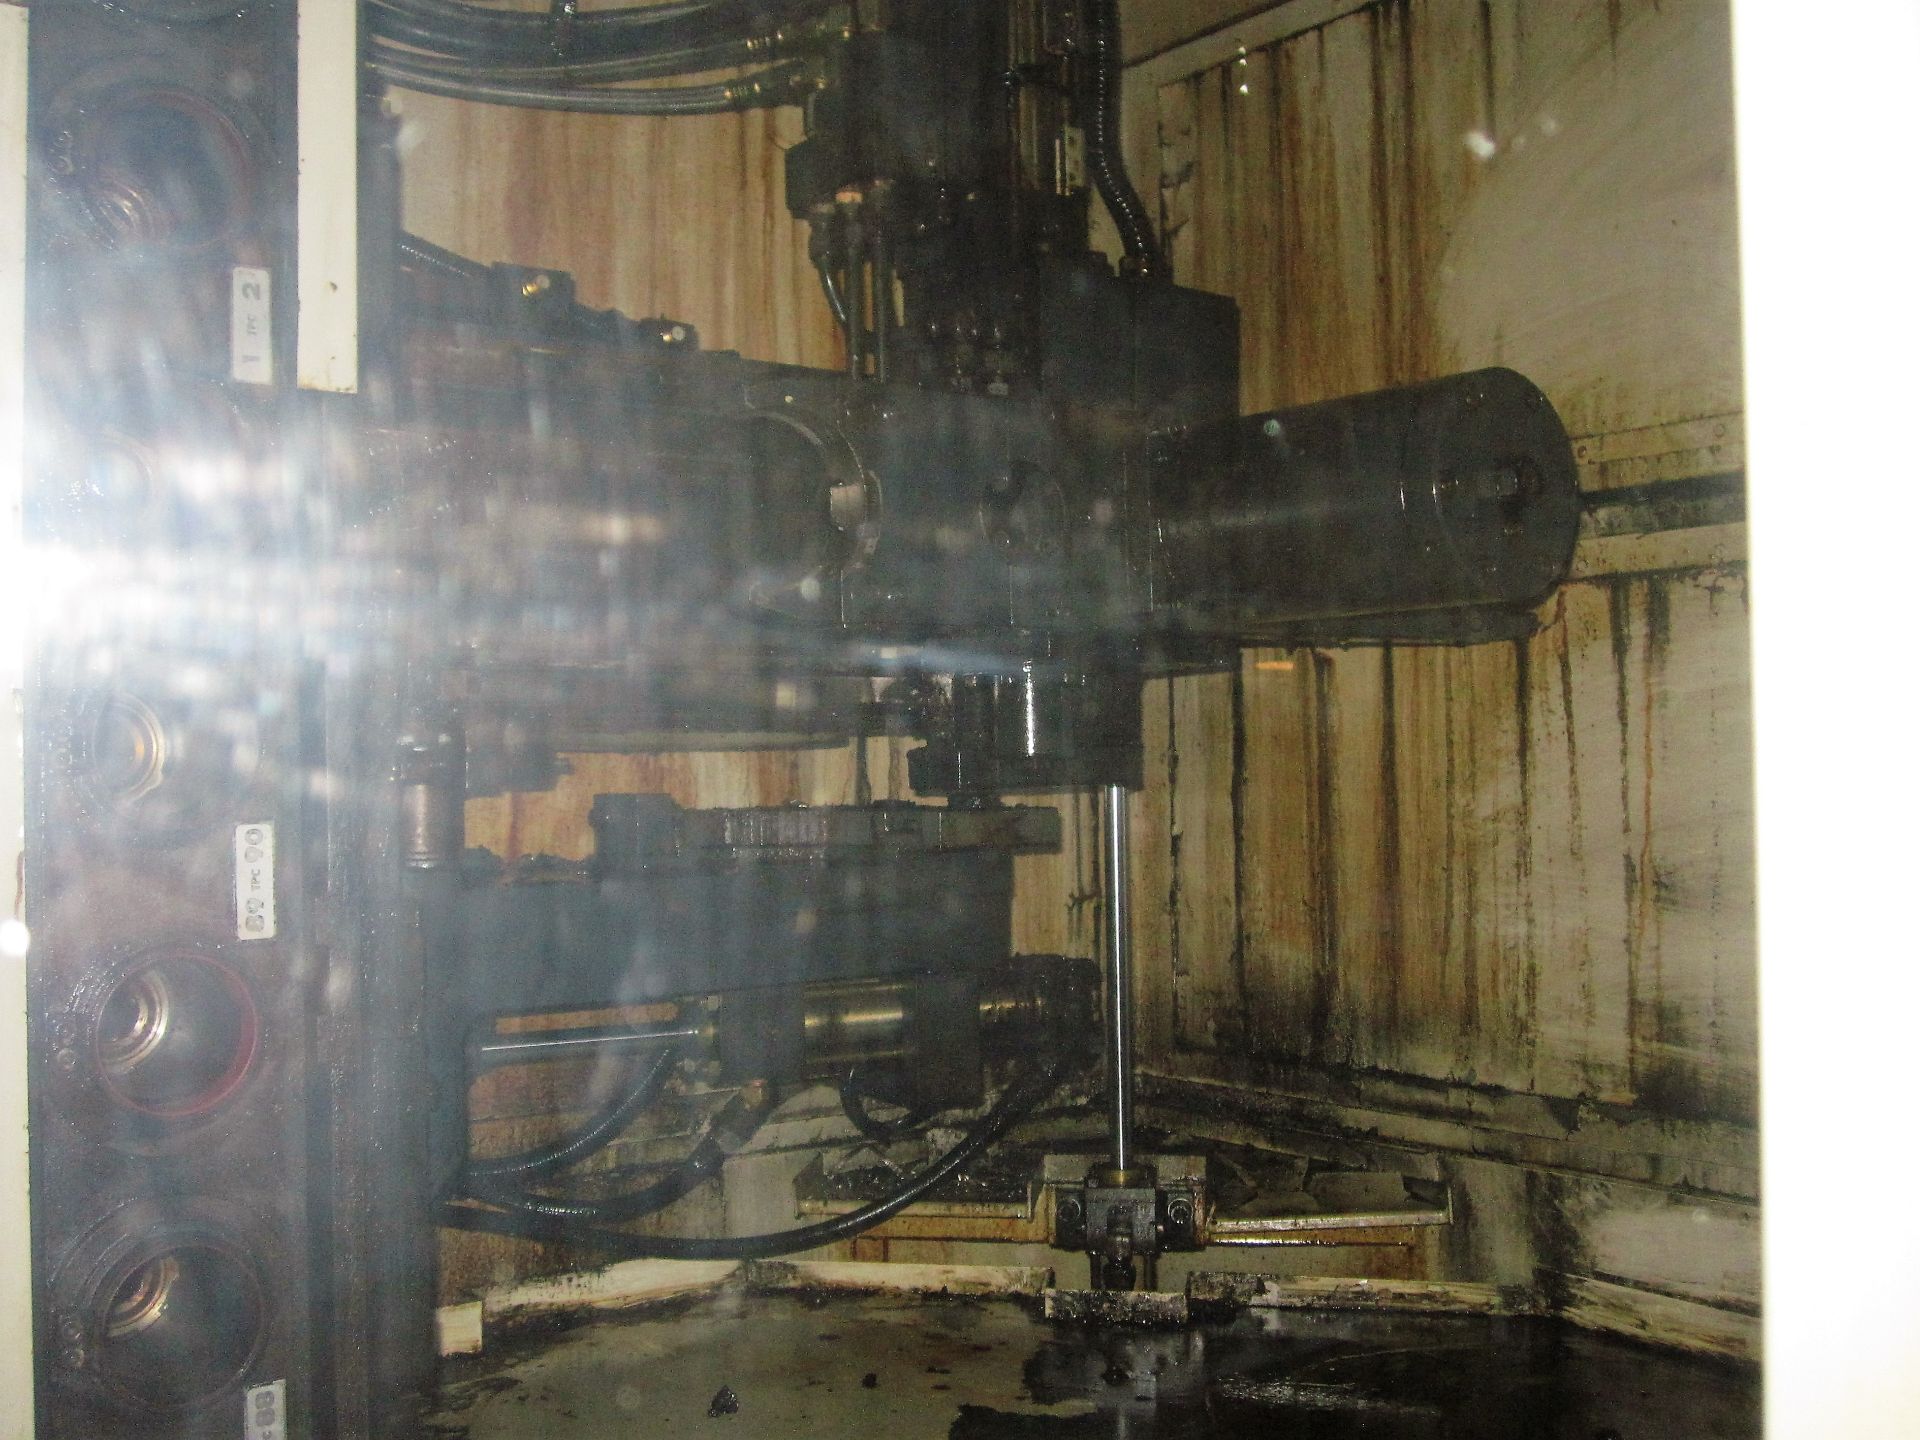 TOSHIBA BMC-800B CNC HORIZONTAL MACHINING CENTER - Image 11 of 11